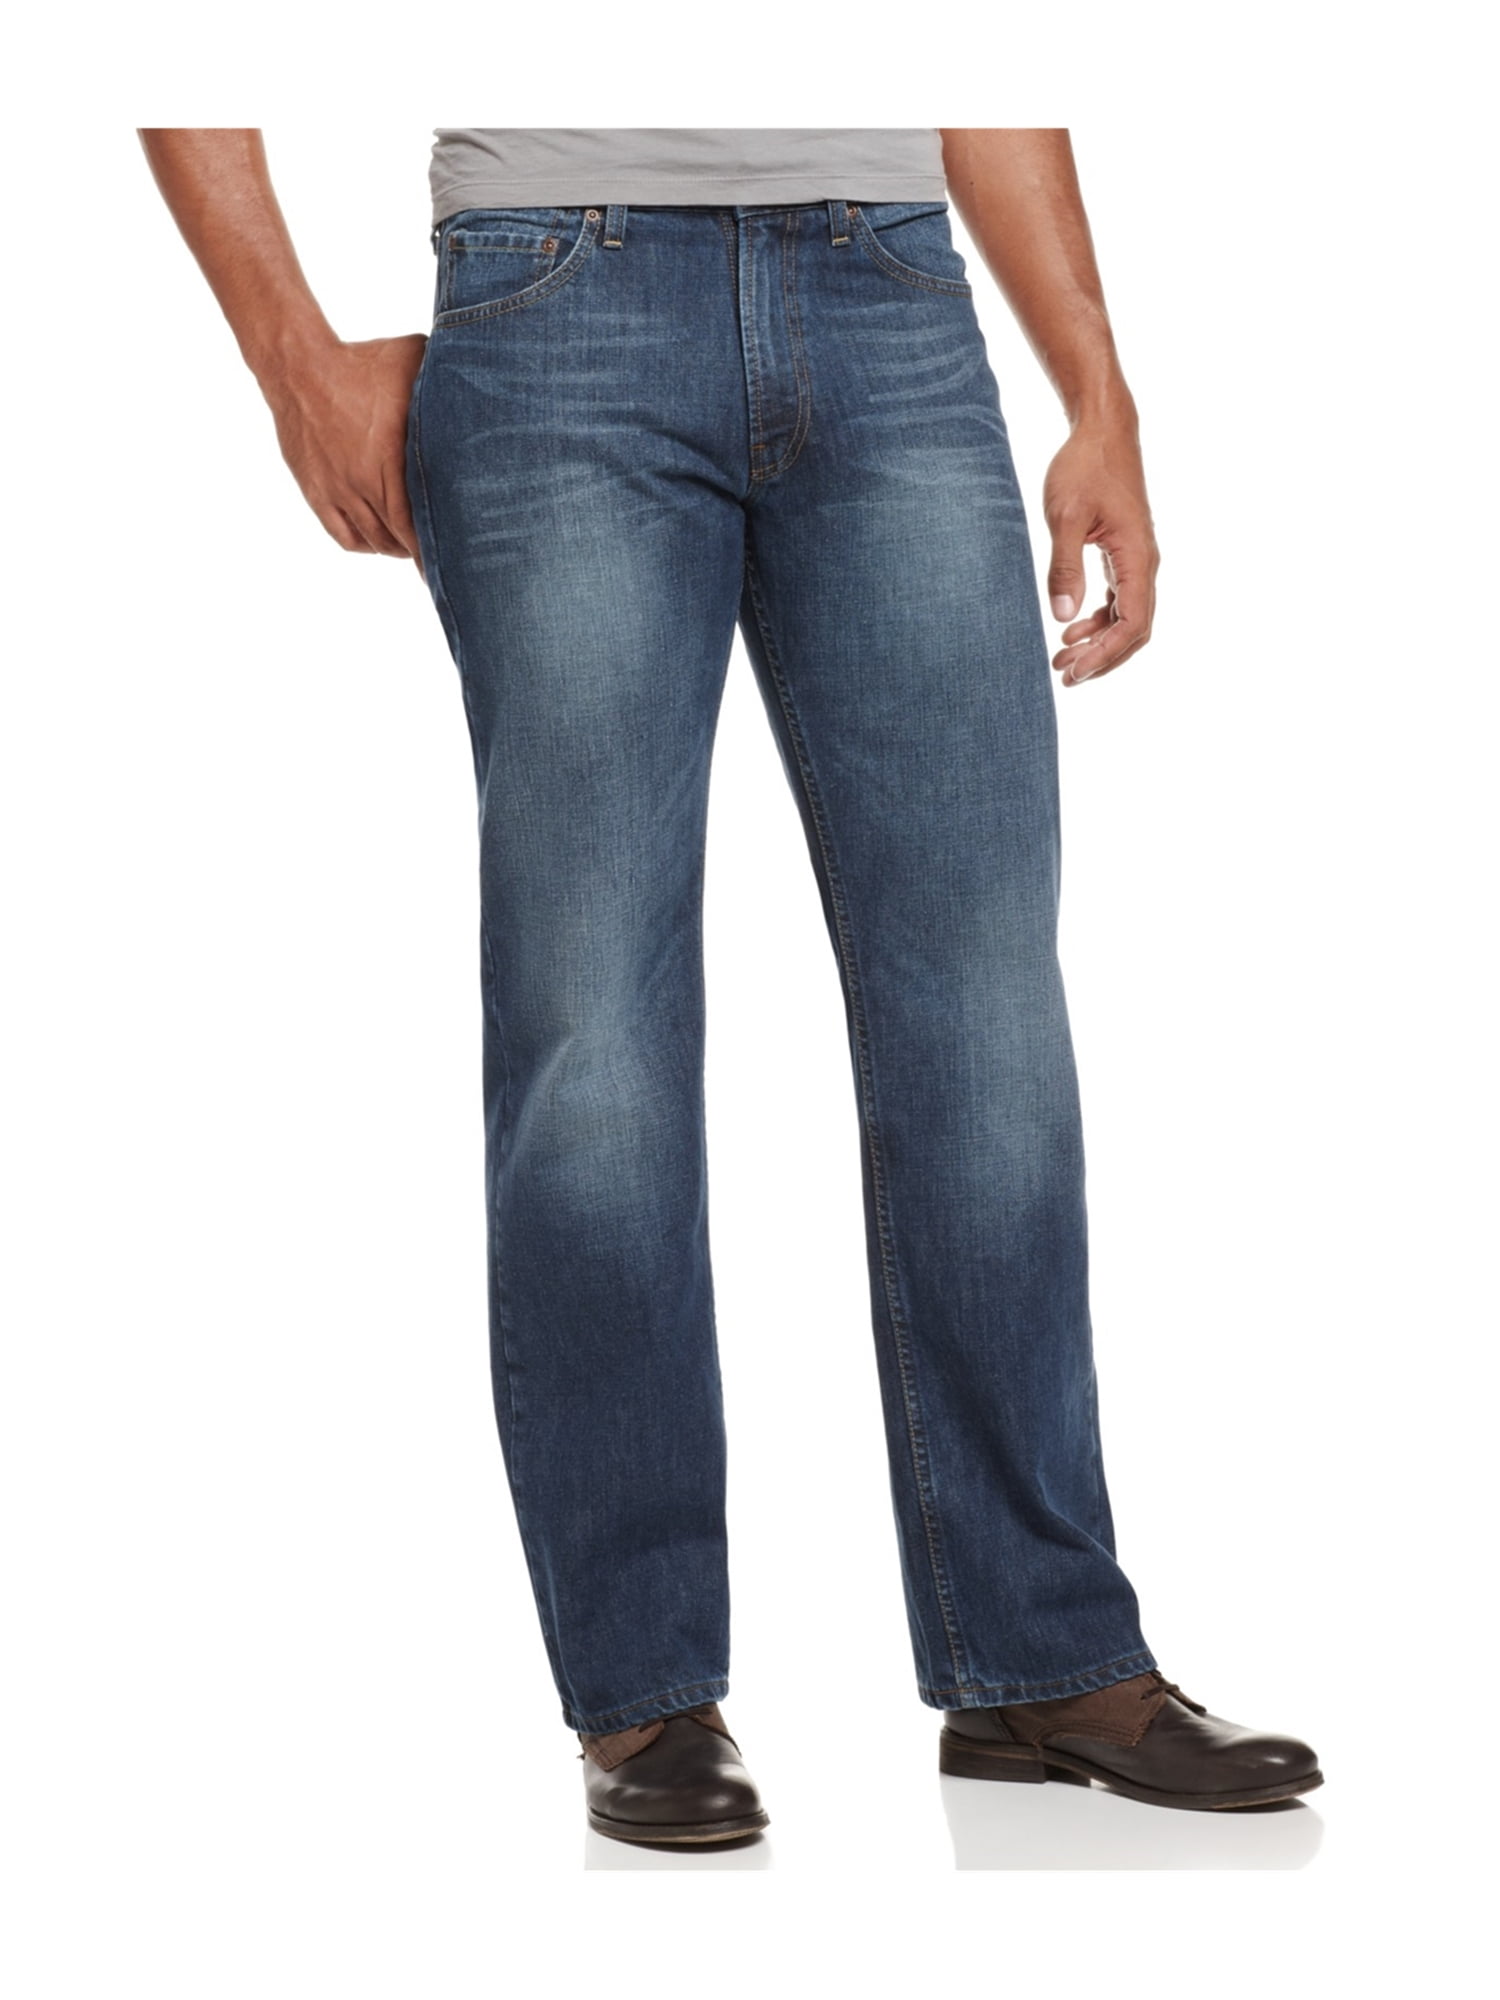 nautica bootcut jeans